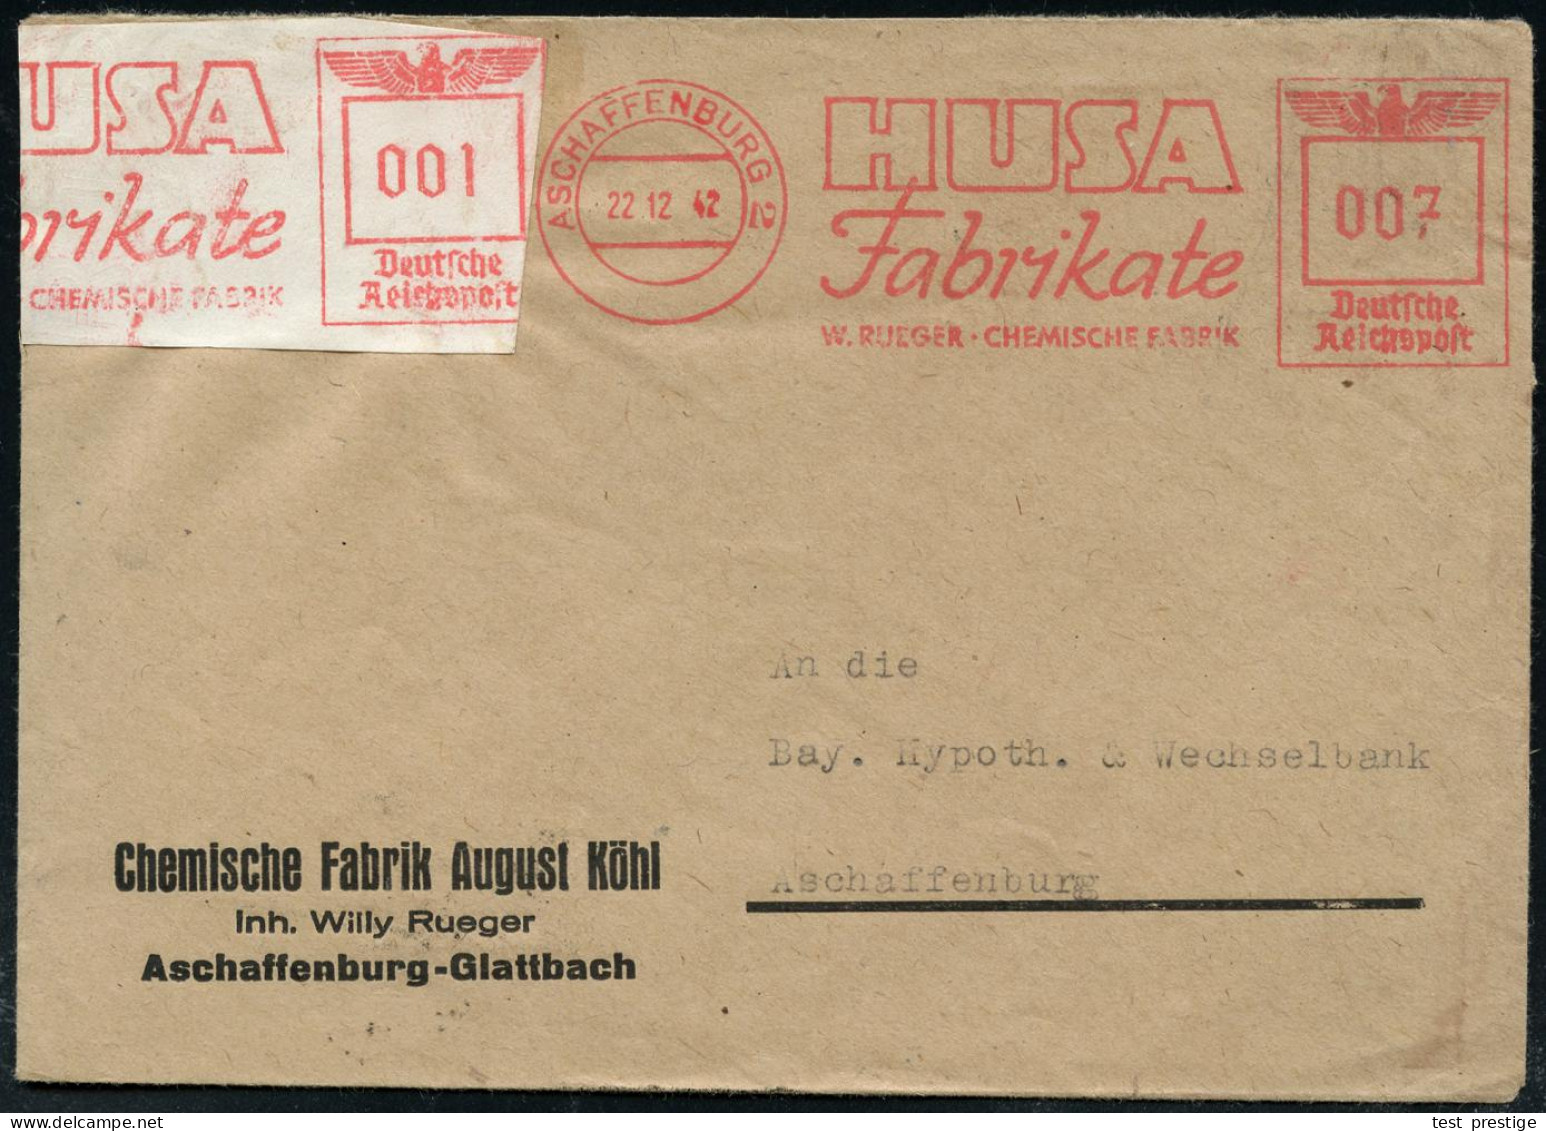 ASCHAFFENBURG 2/ HUSA/ Fabrikate/ W.RUEGER-CHEMISCHE FABRIK 1942 (22.12.) AFS Francotyp 007 Pf. + Aufkleber Mit AFS 001  - Chimie